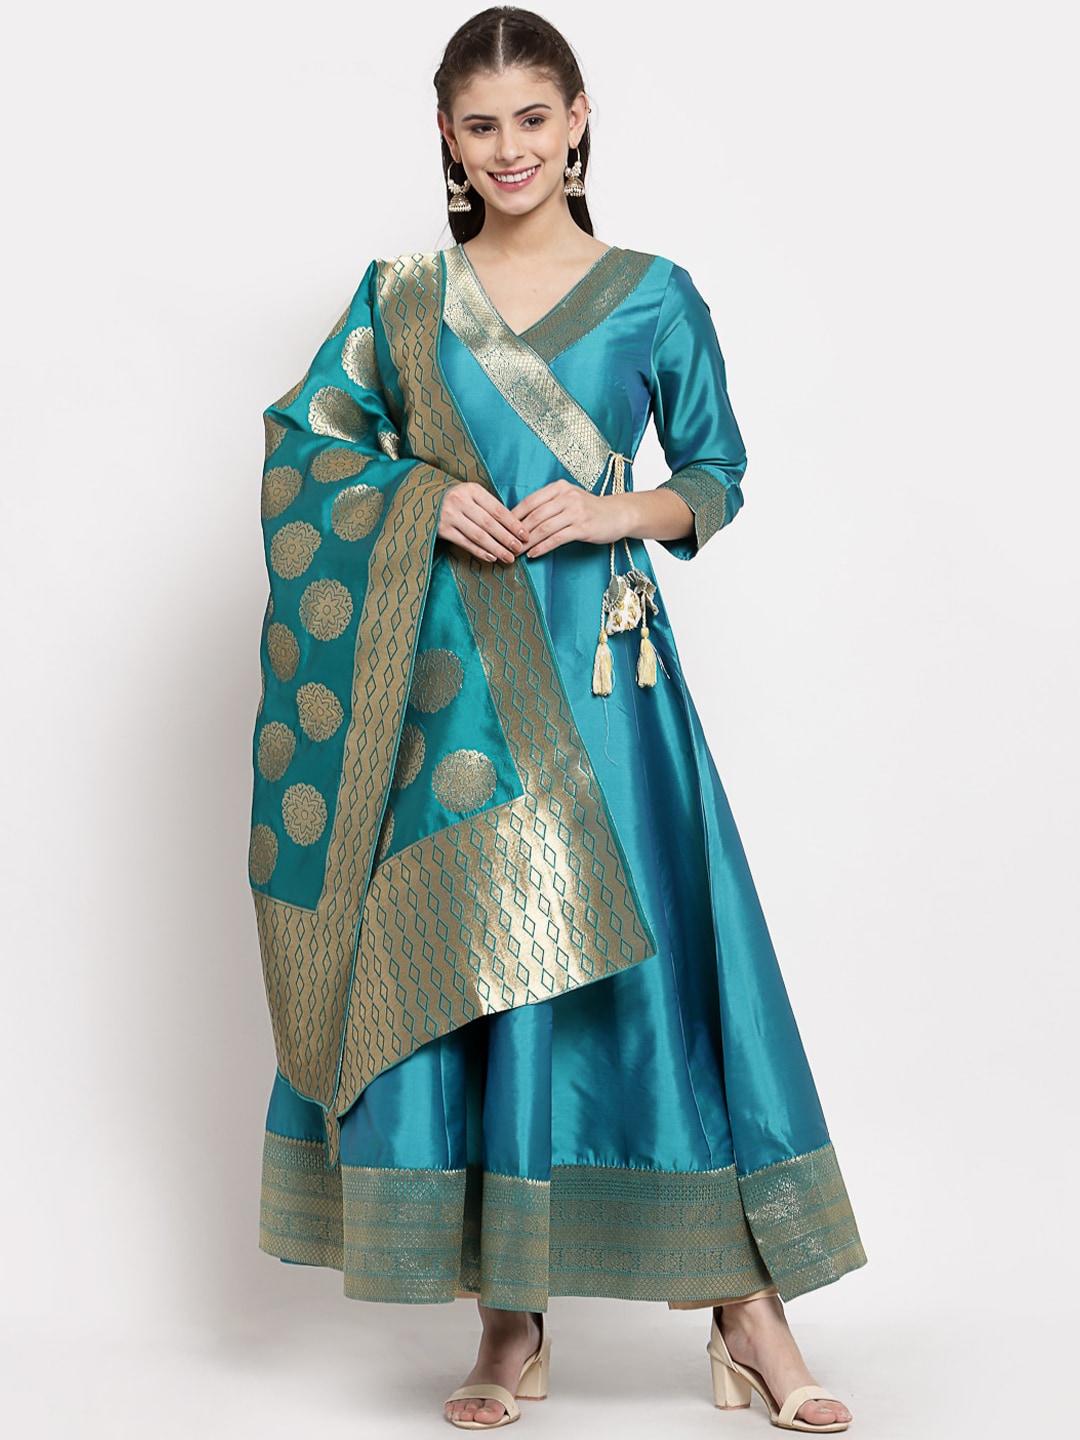 Myshka Green & Gold-Toned Ethnic Motifs Ethnic Anarkali Dress With Dupatta Price in India